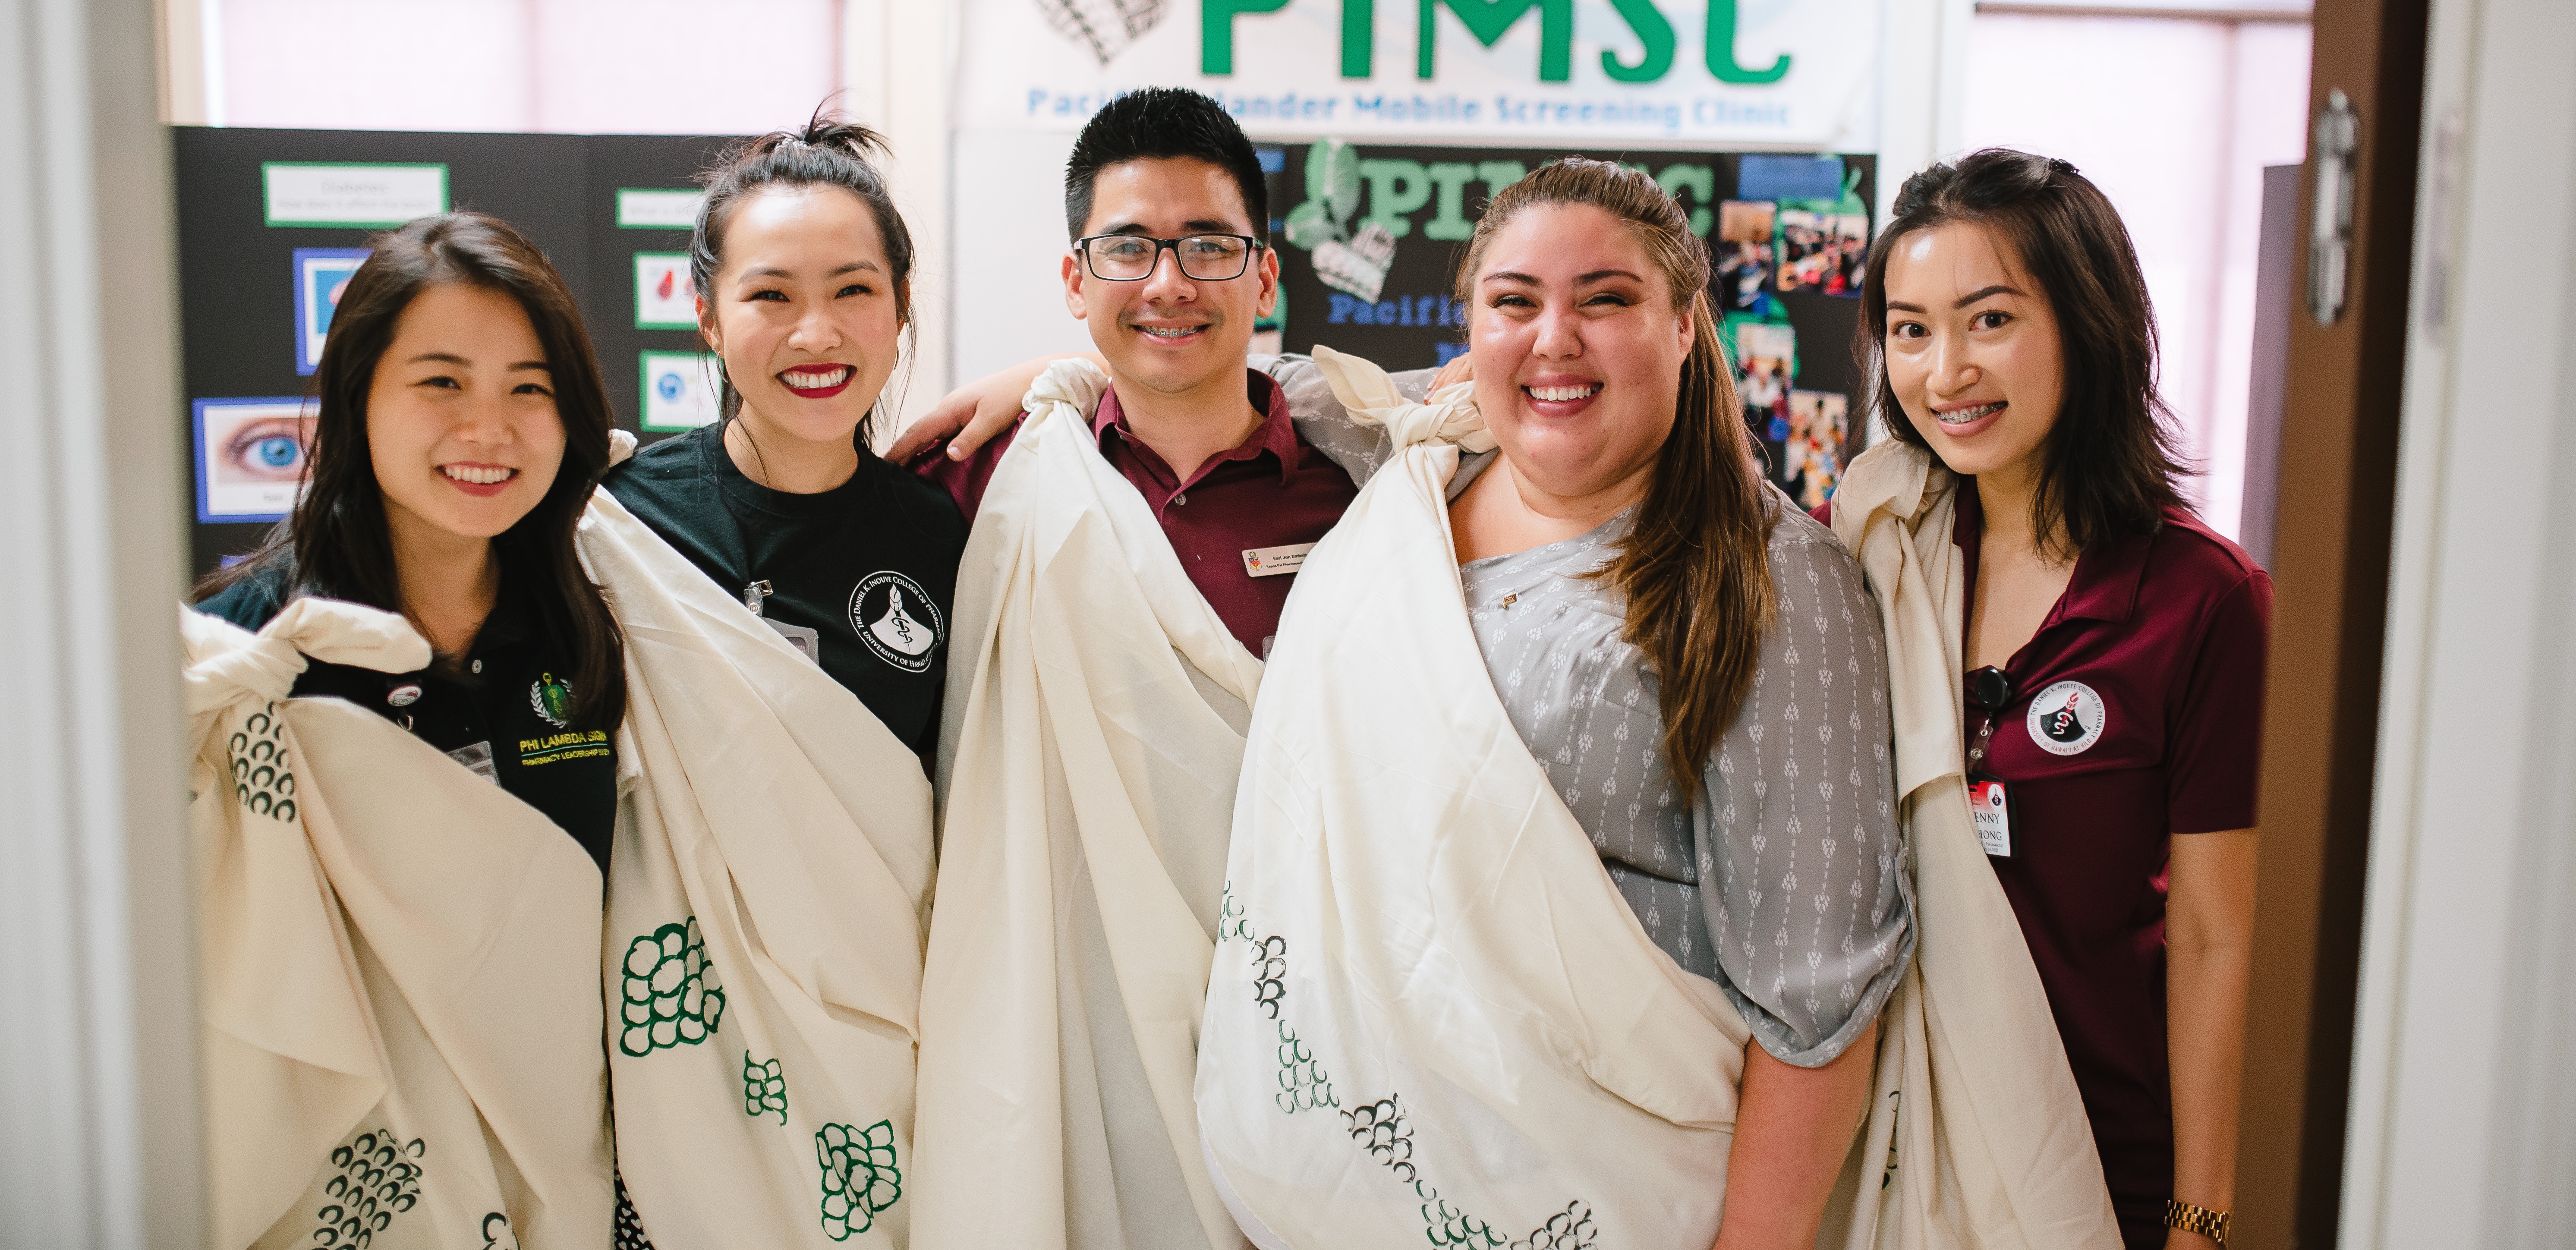 Smiling students wearing kiheis, a traditional hawaiian wrap